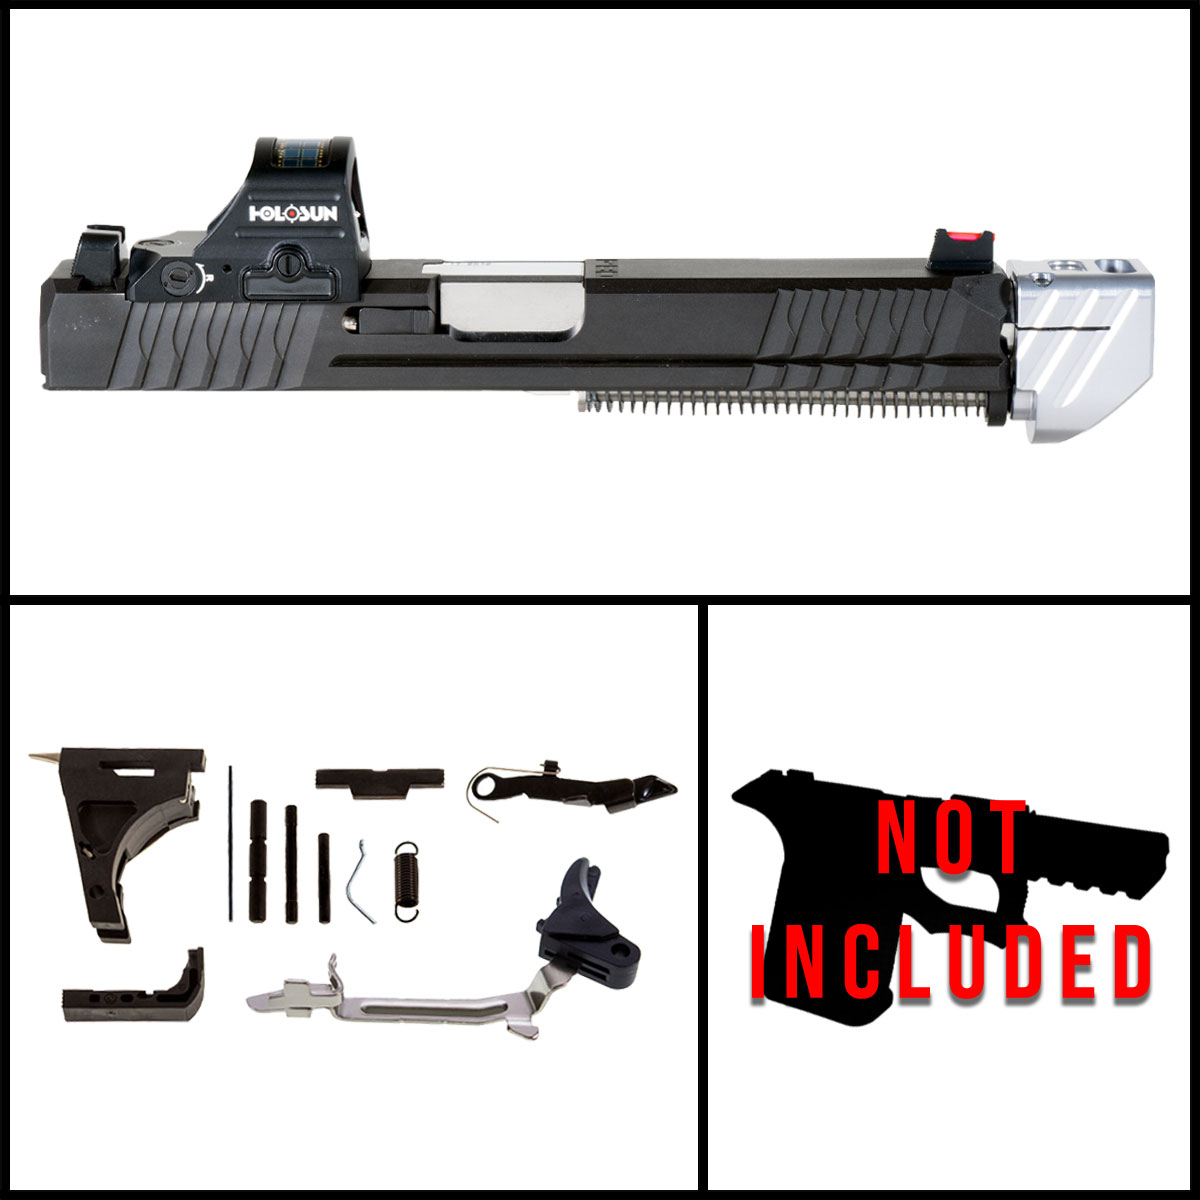 DTT 'Thought Process' 9mm Full Pistol Build Kit - Glock 17 Gen 1-3 Compatible